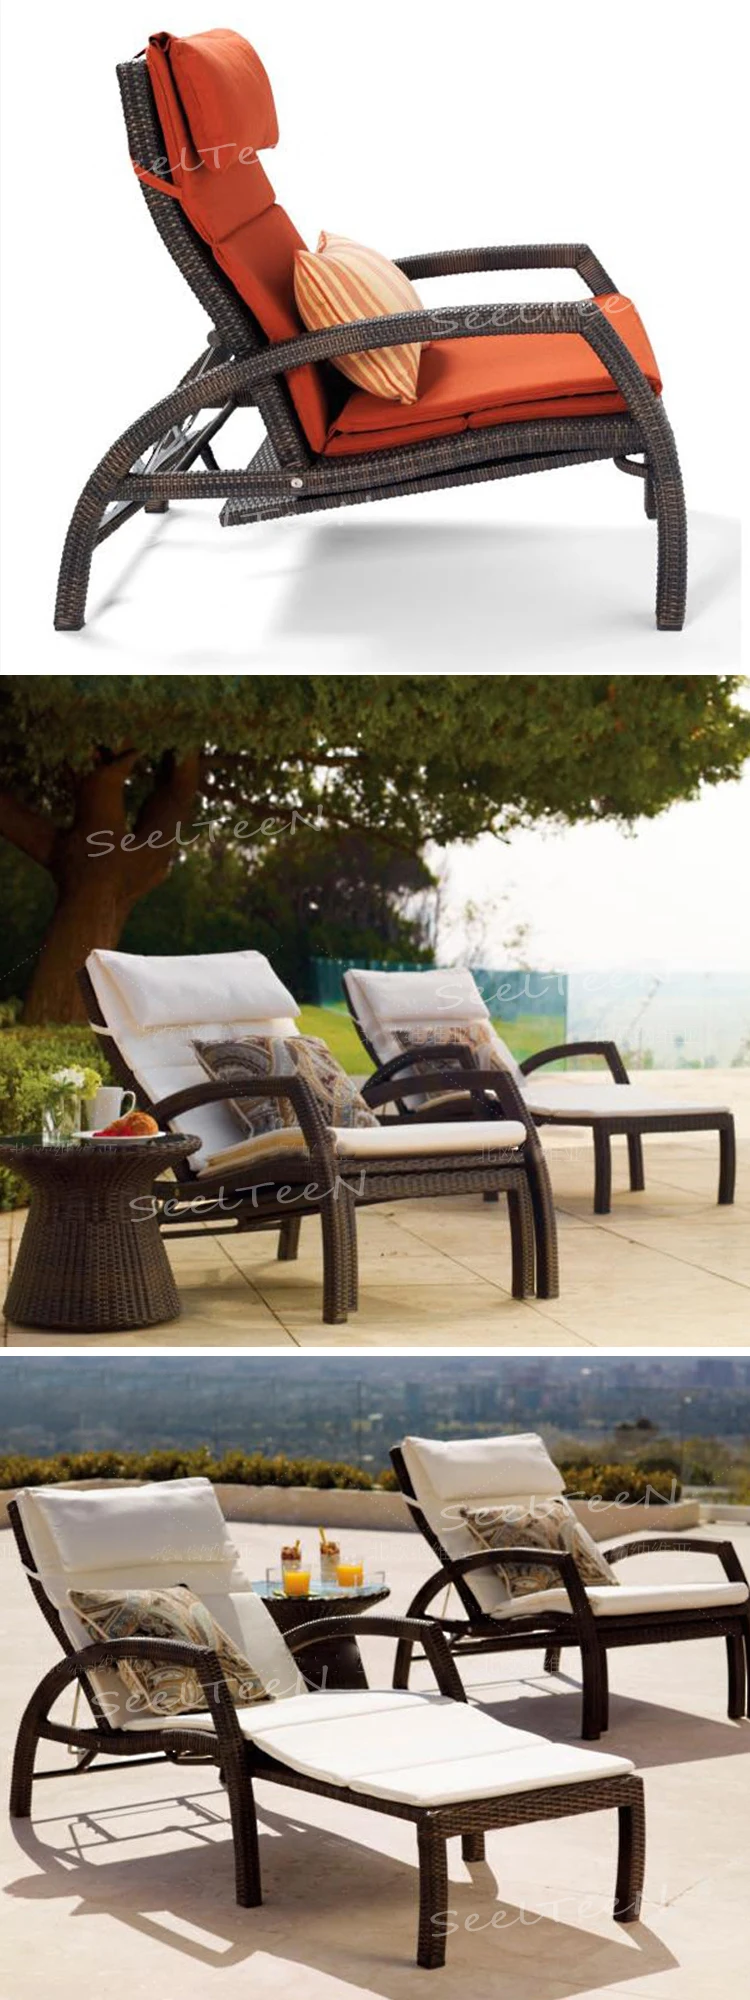 Rattan hotel commercial leisure sofa design outdoor furniture